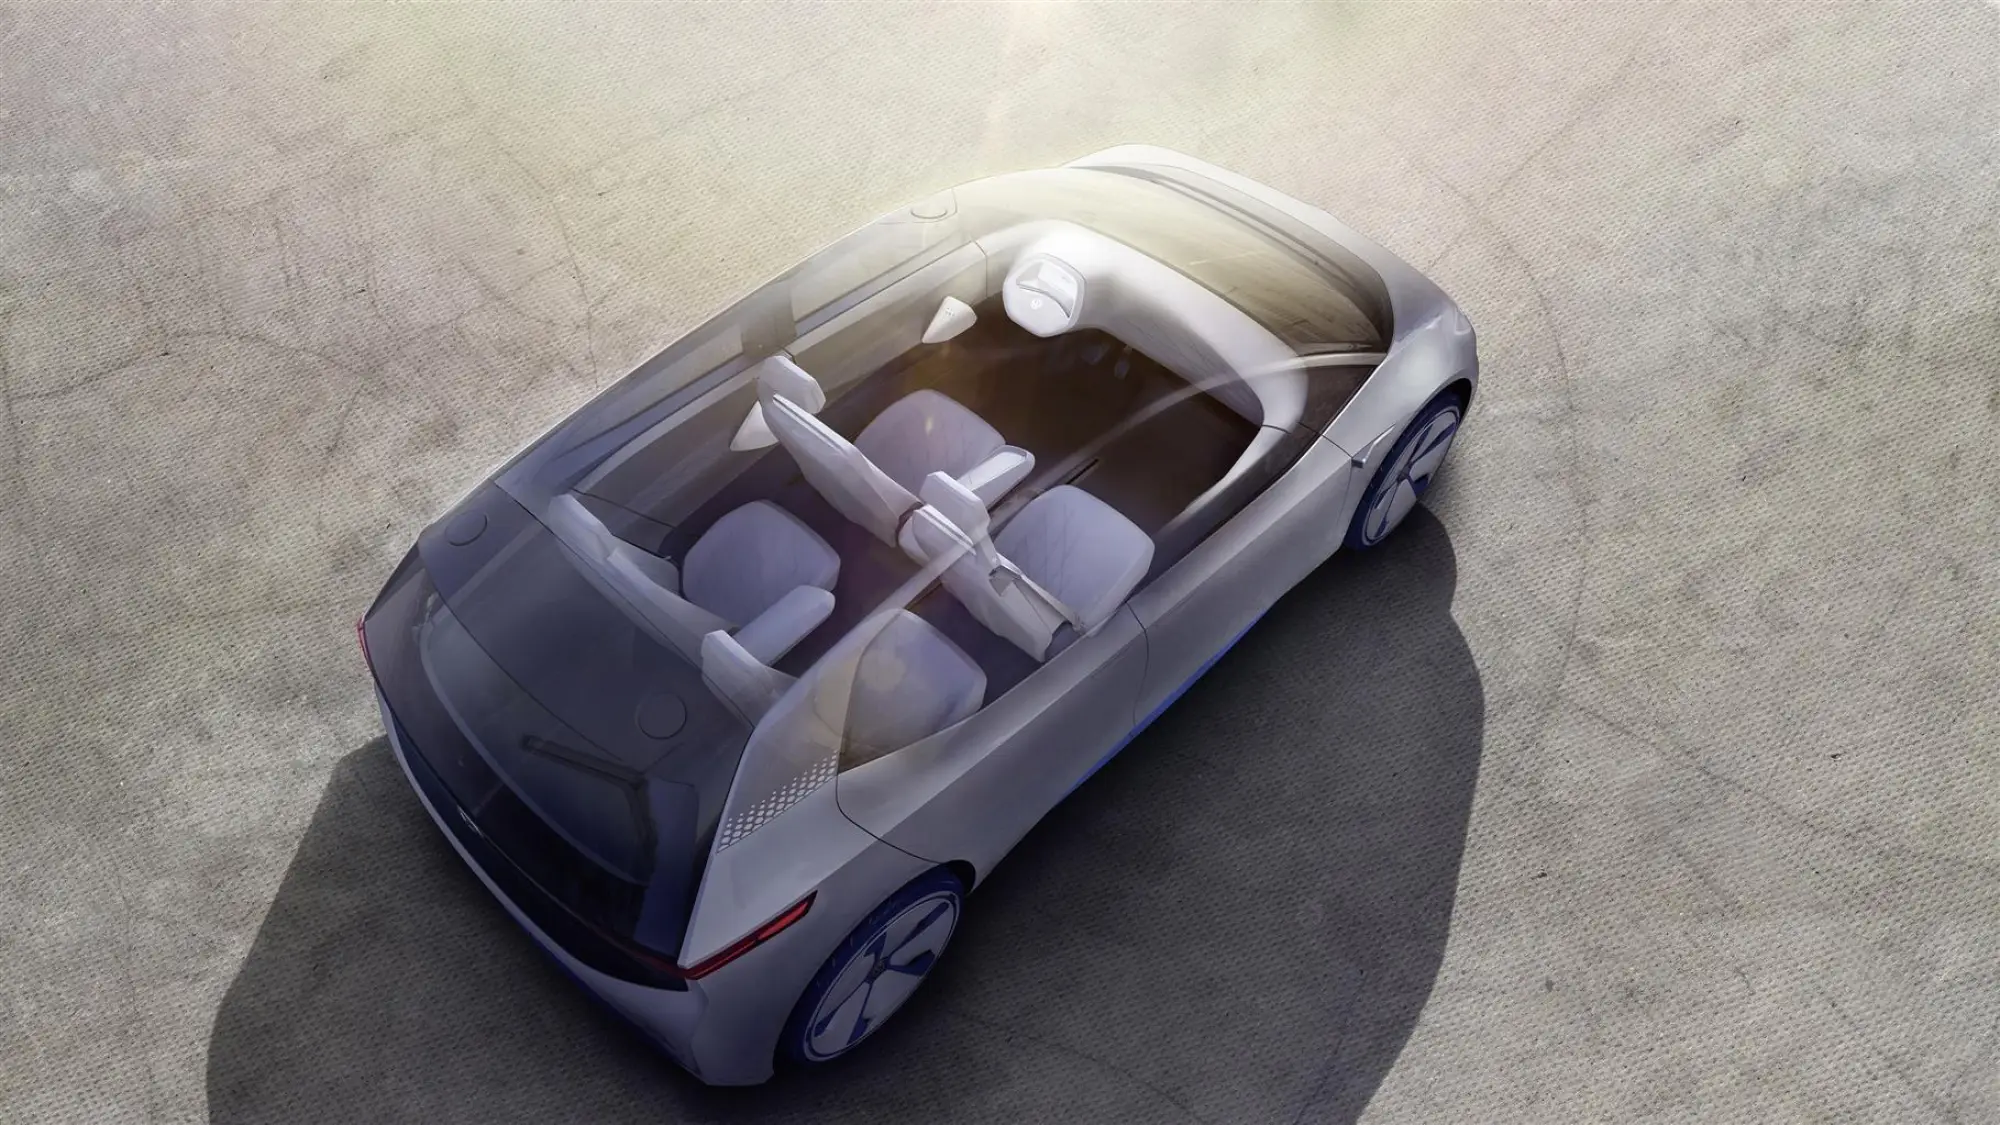 Volkswagen Concept I.D. Salone di parigi 2016 foto stampa - 18